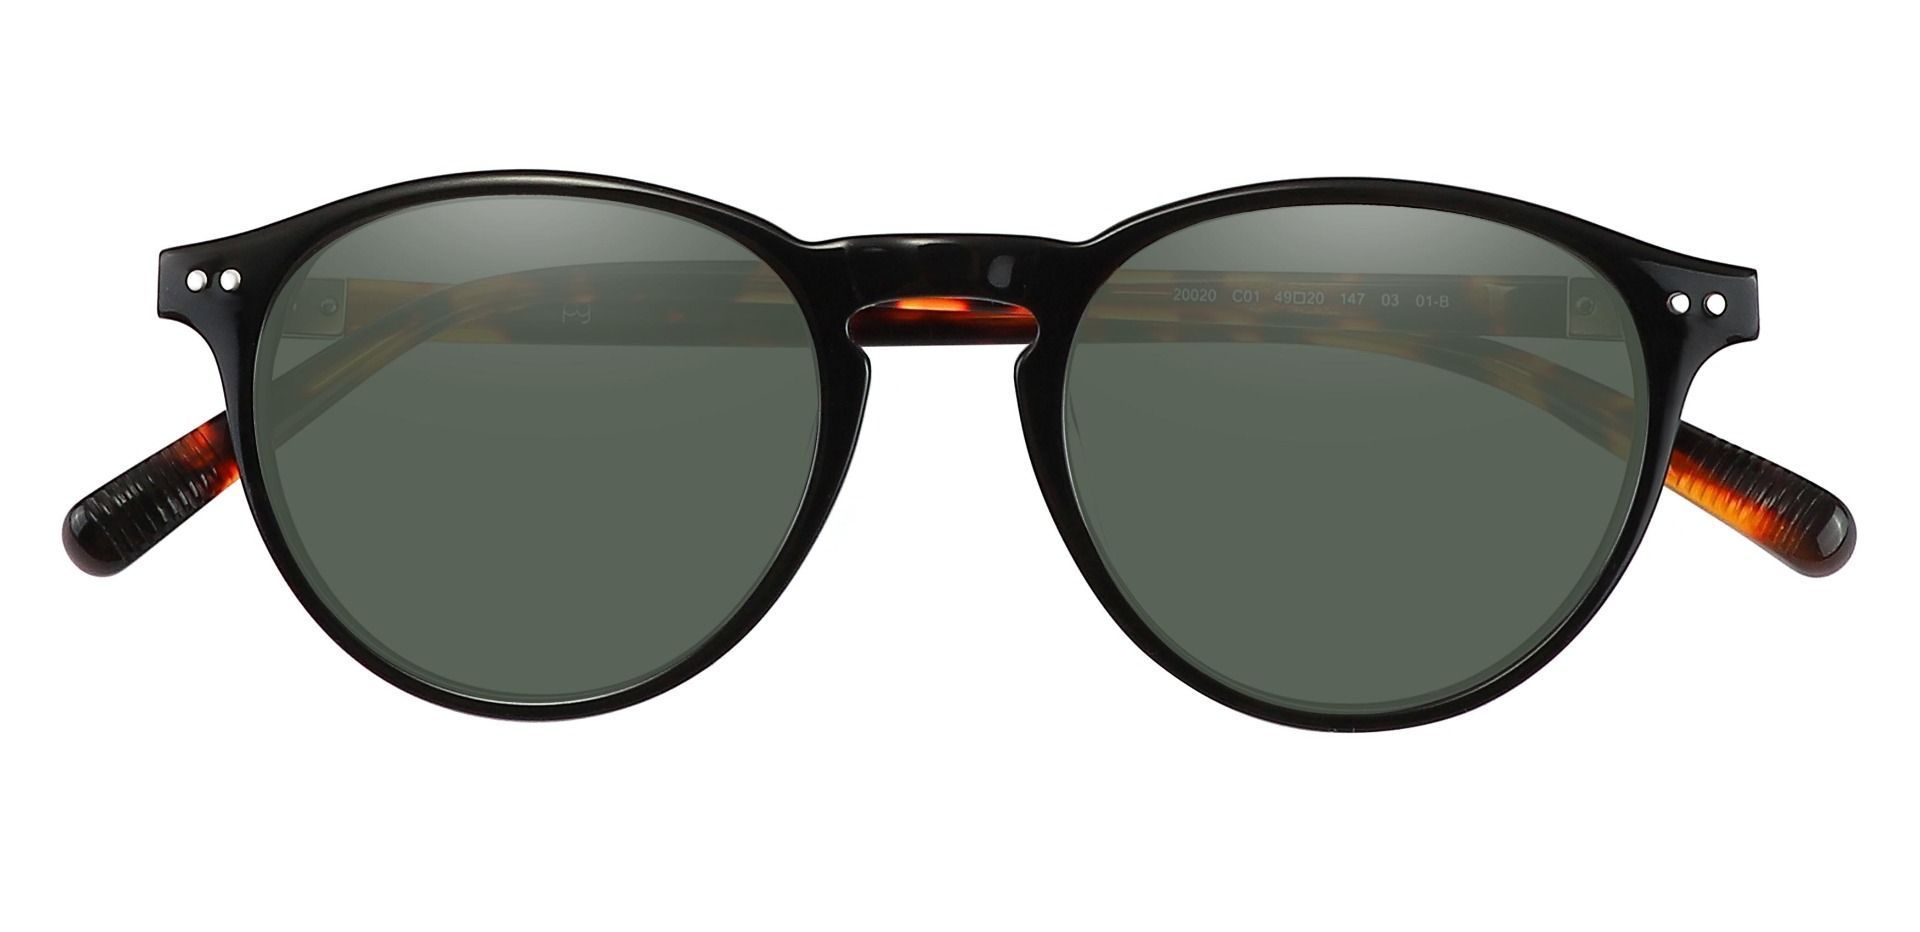 Monarch Oval Prescription Sunglasses - Black Frame With Green Lenses